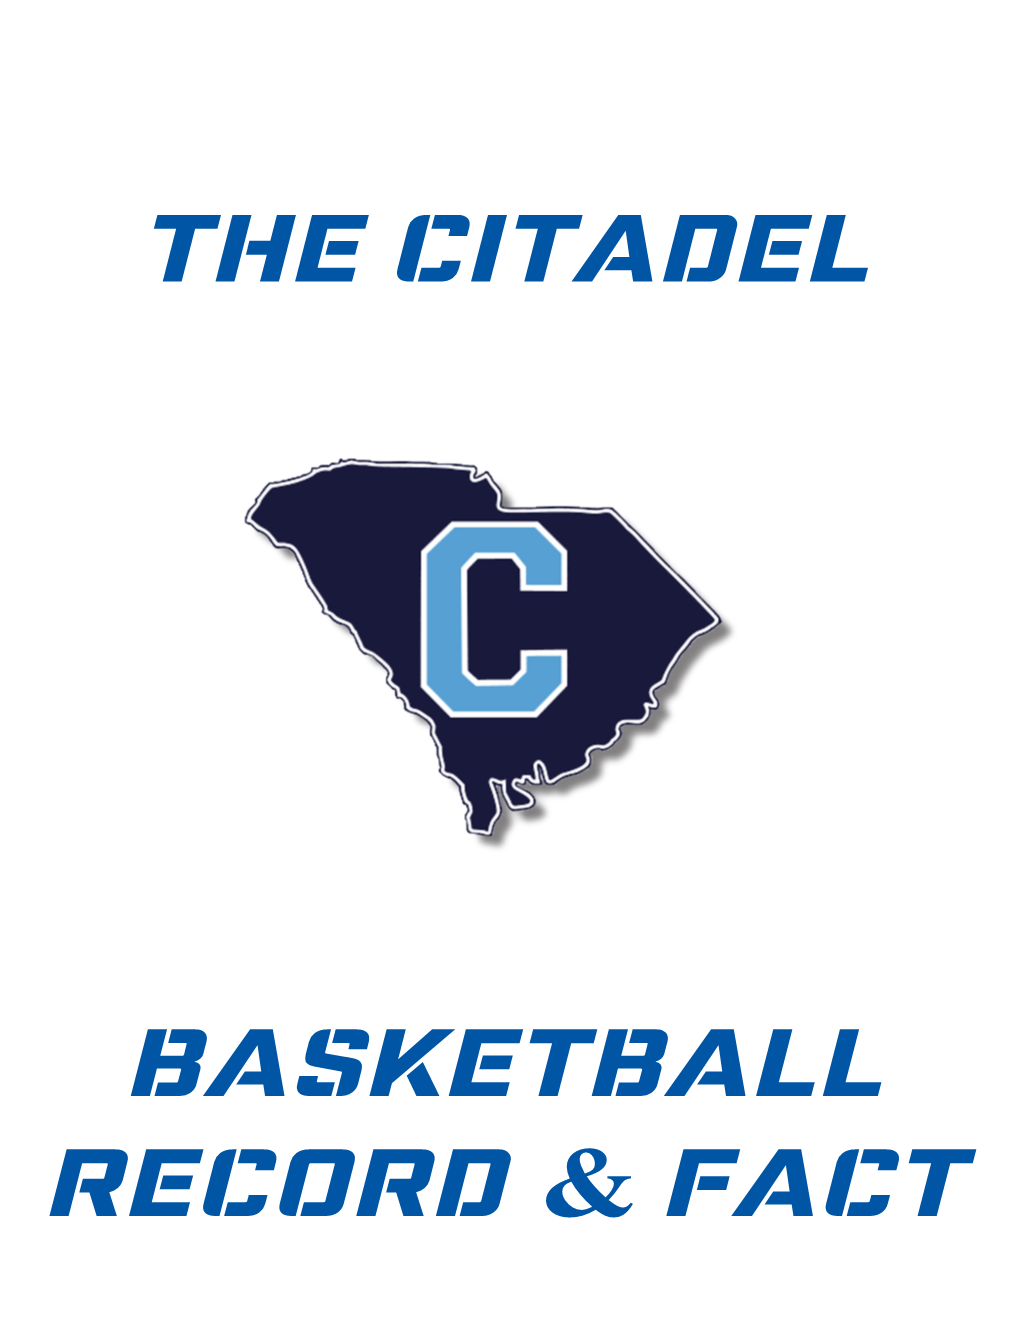 The Citadel Basketball Record & Fact